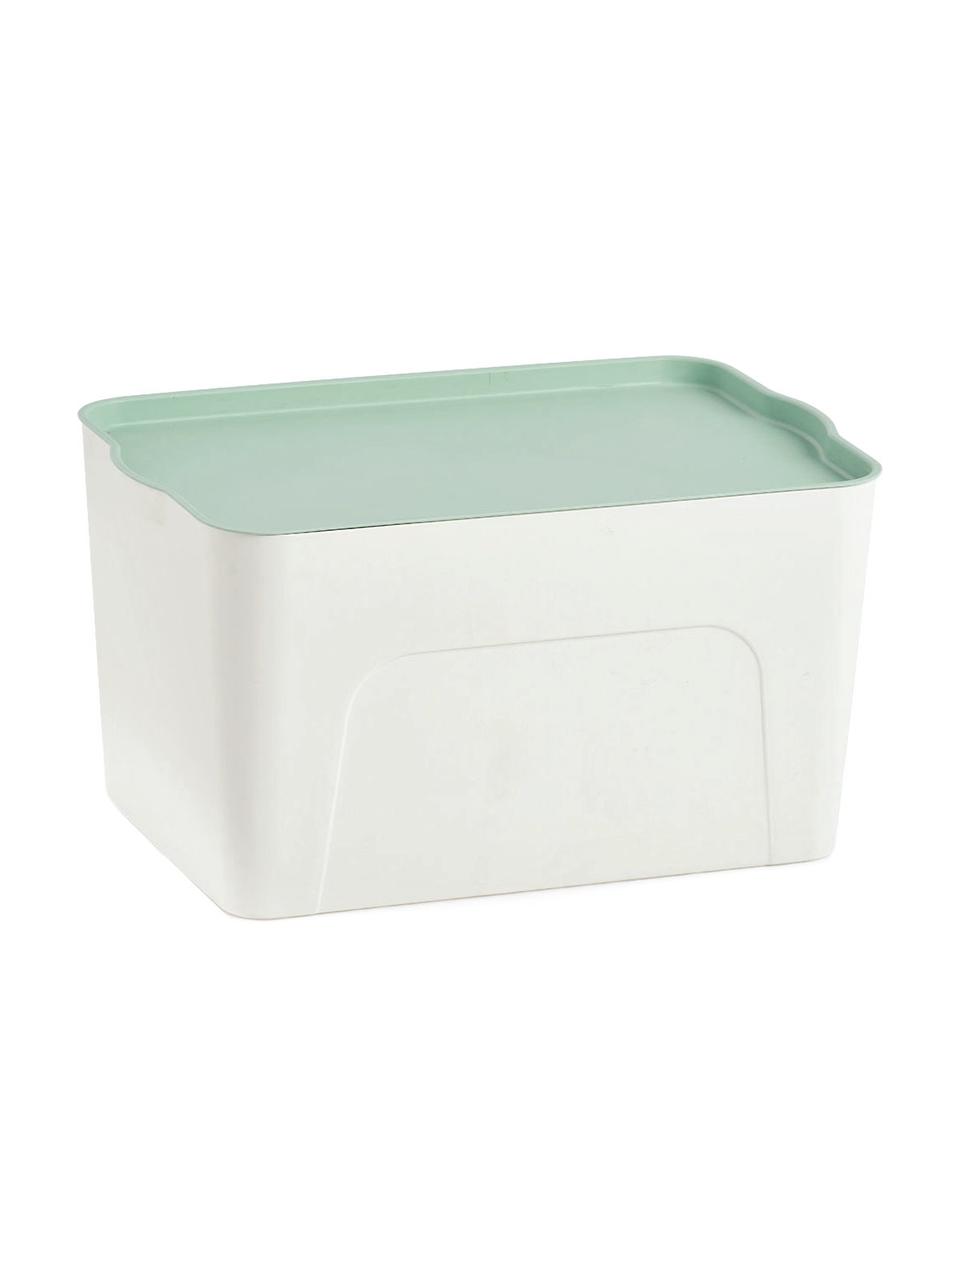 Aufbewahrungsbox Mintho, Kunststoff, Mintgrün, 45 x 25 cm